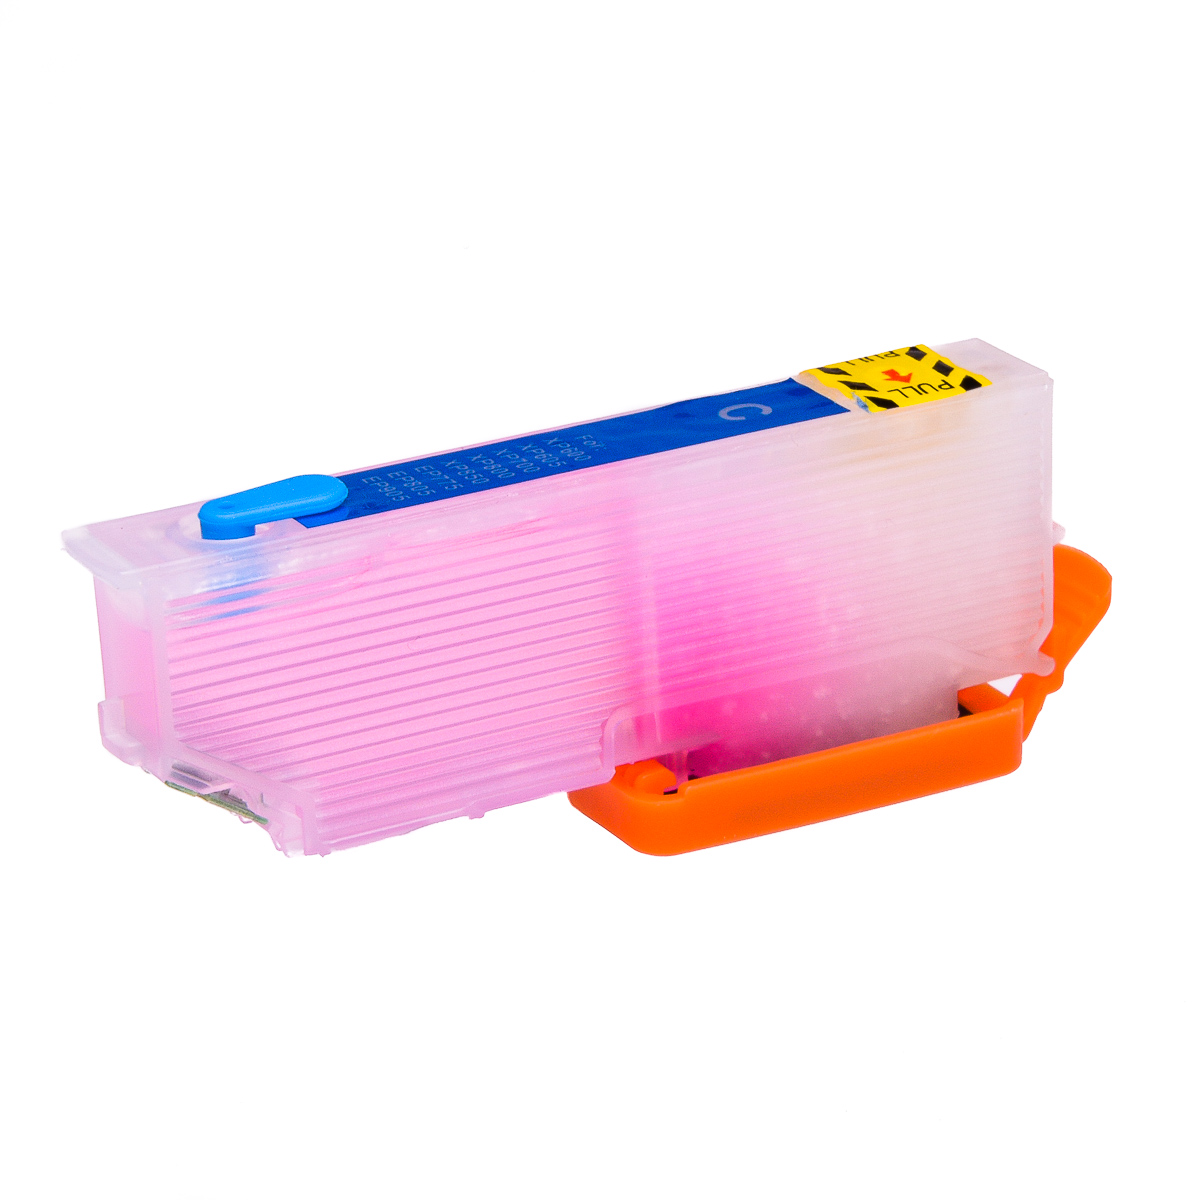 Cyan printhead cleaning cartridge for Epson XP-8000 printer